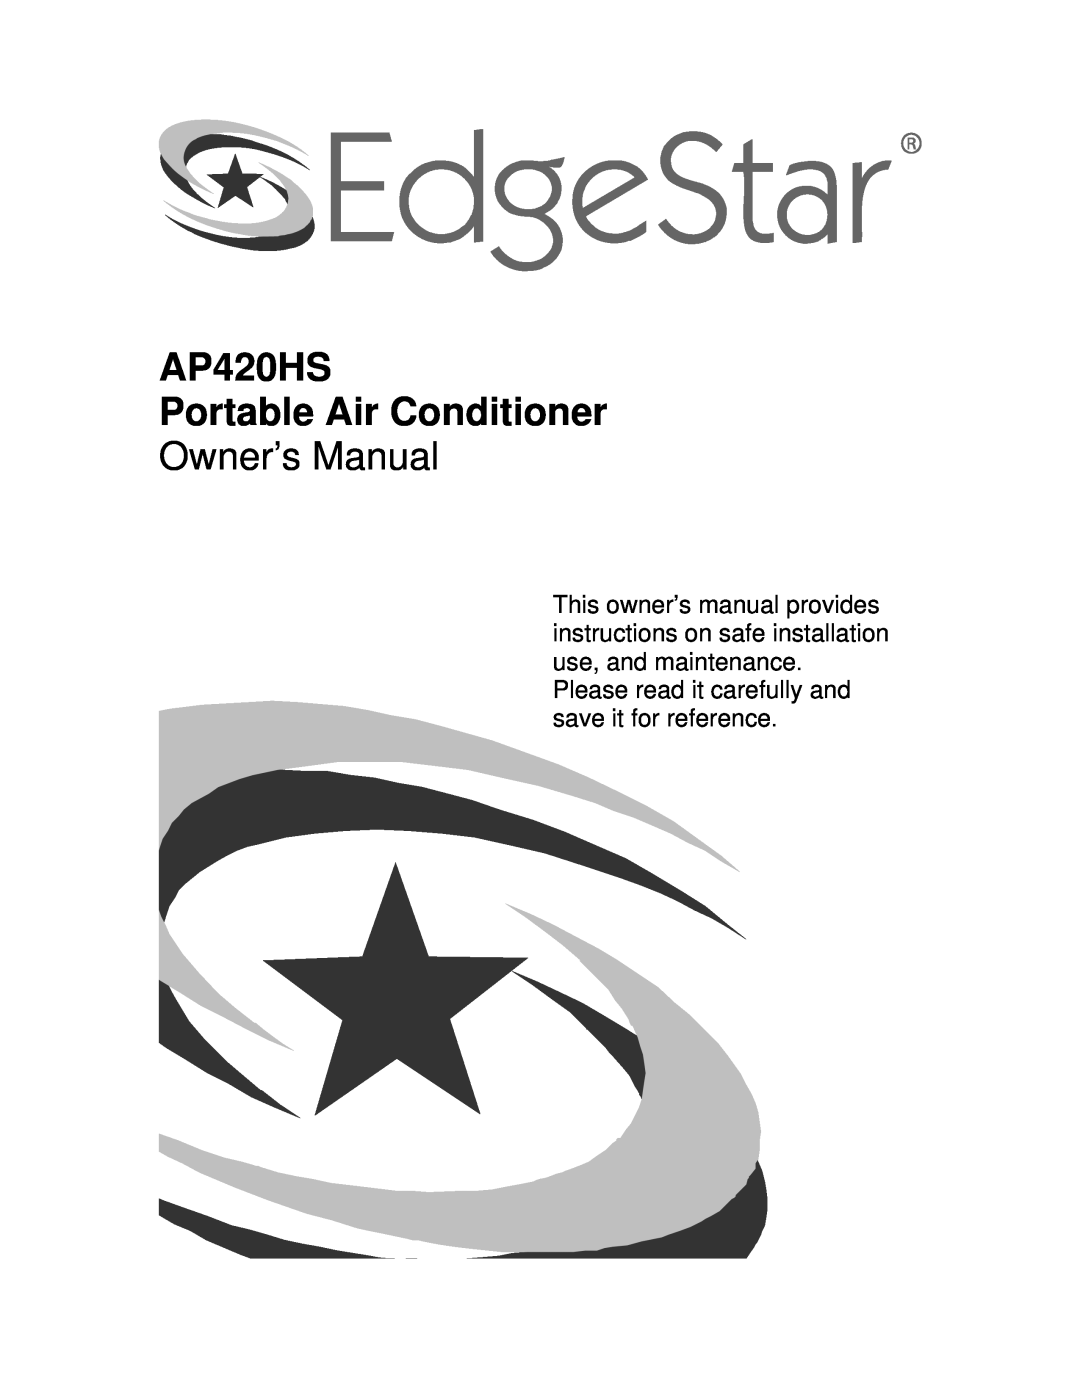 EdgeStar owner manual AP420HS Portable Air Conditioner 